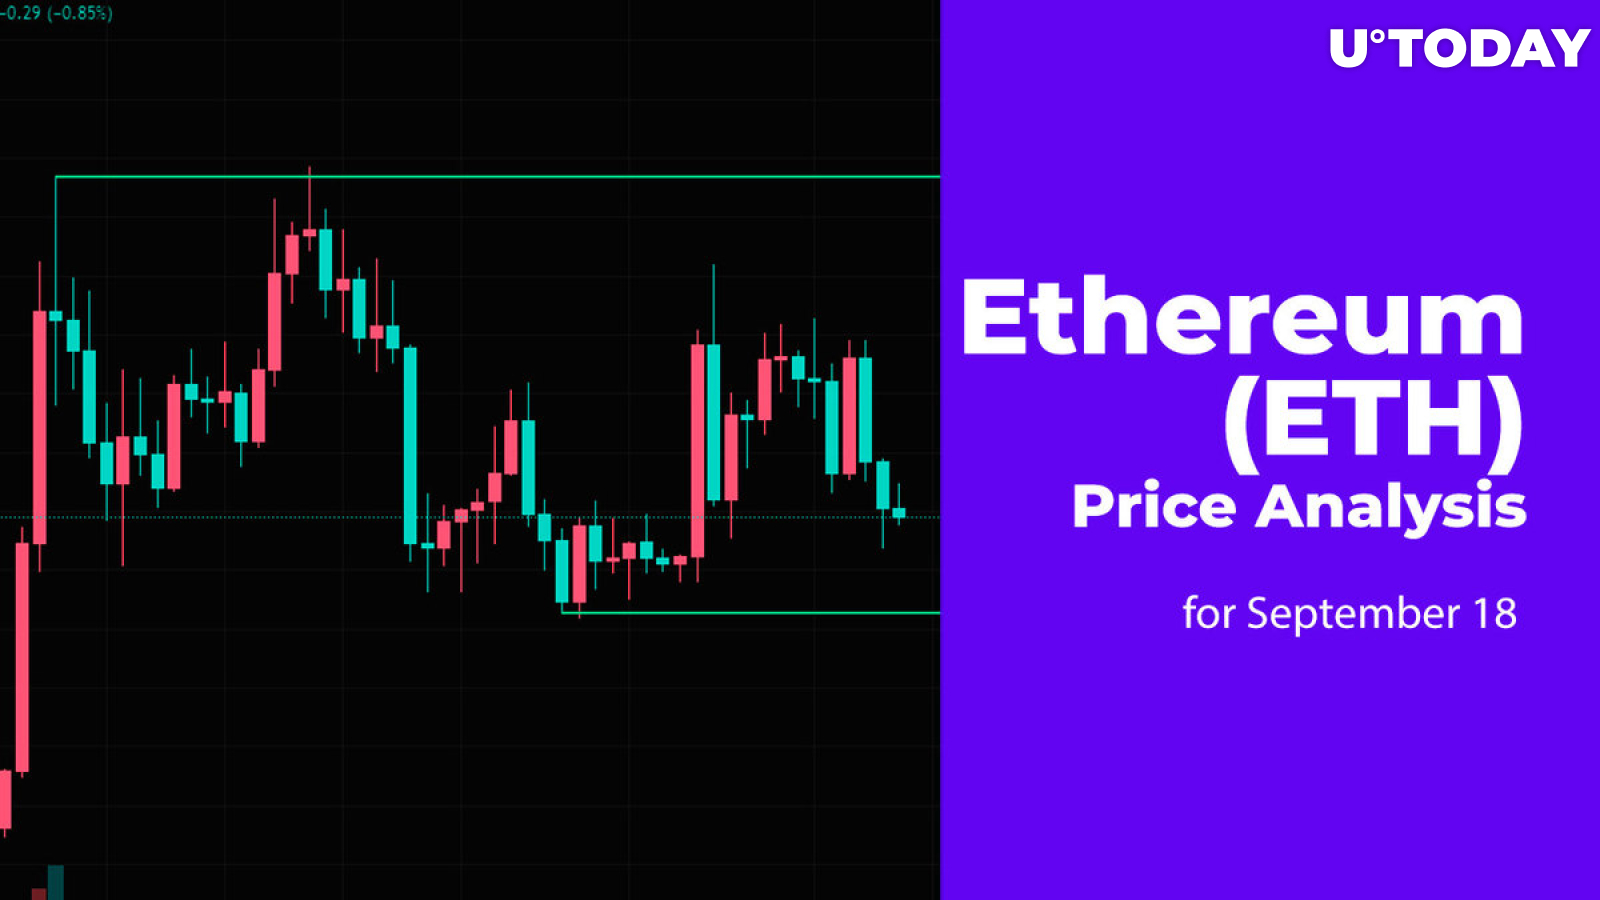 Ethereum (ETH) Price Analysis for September 18